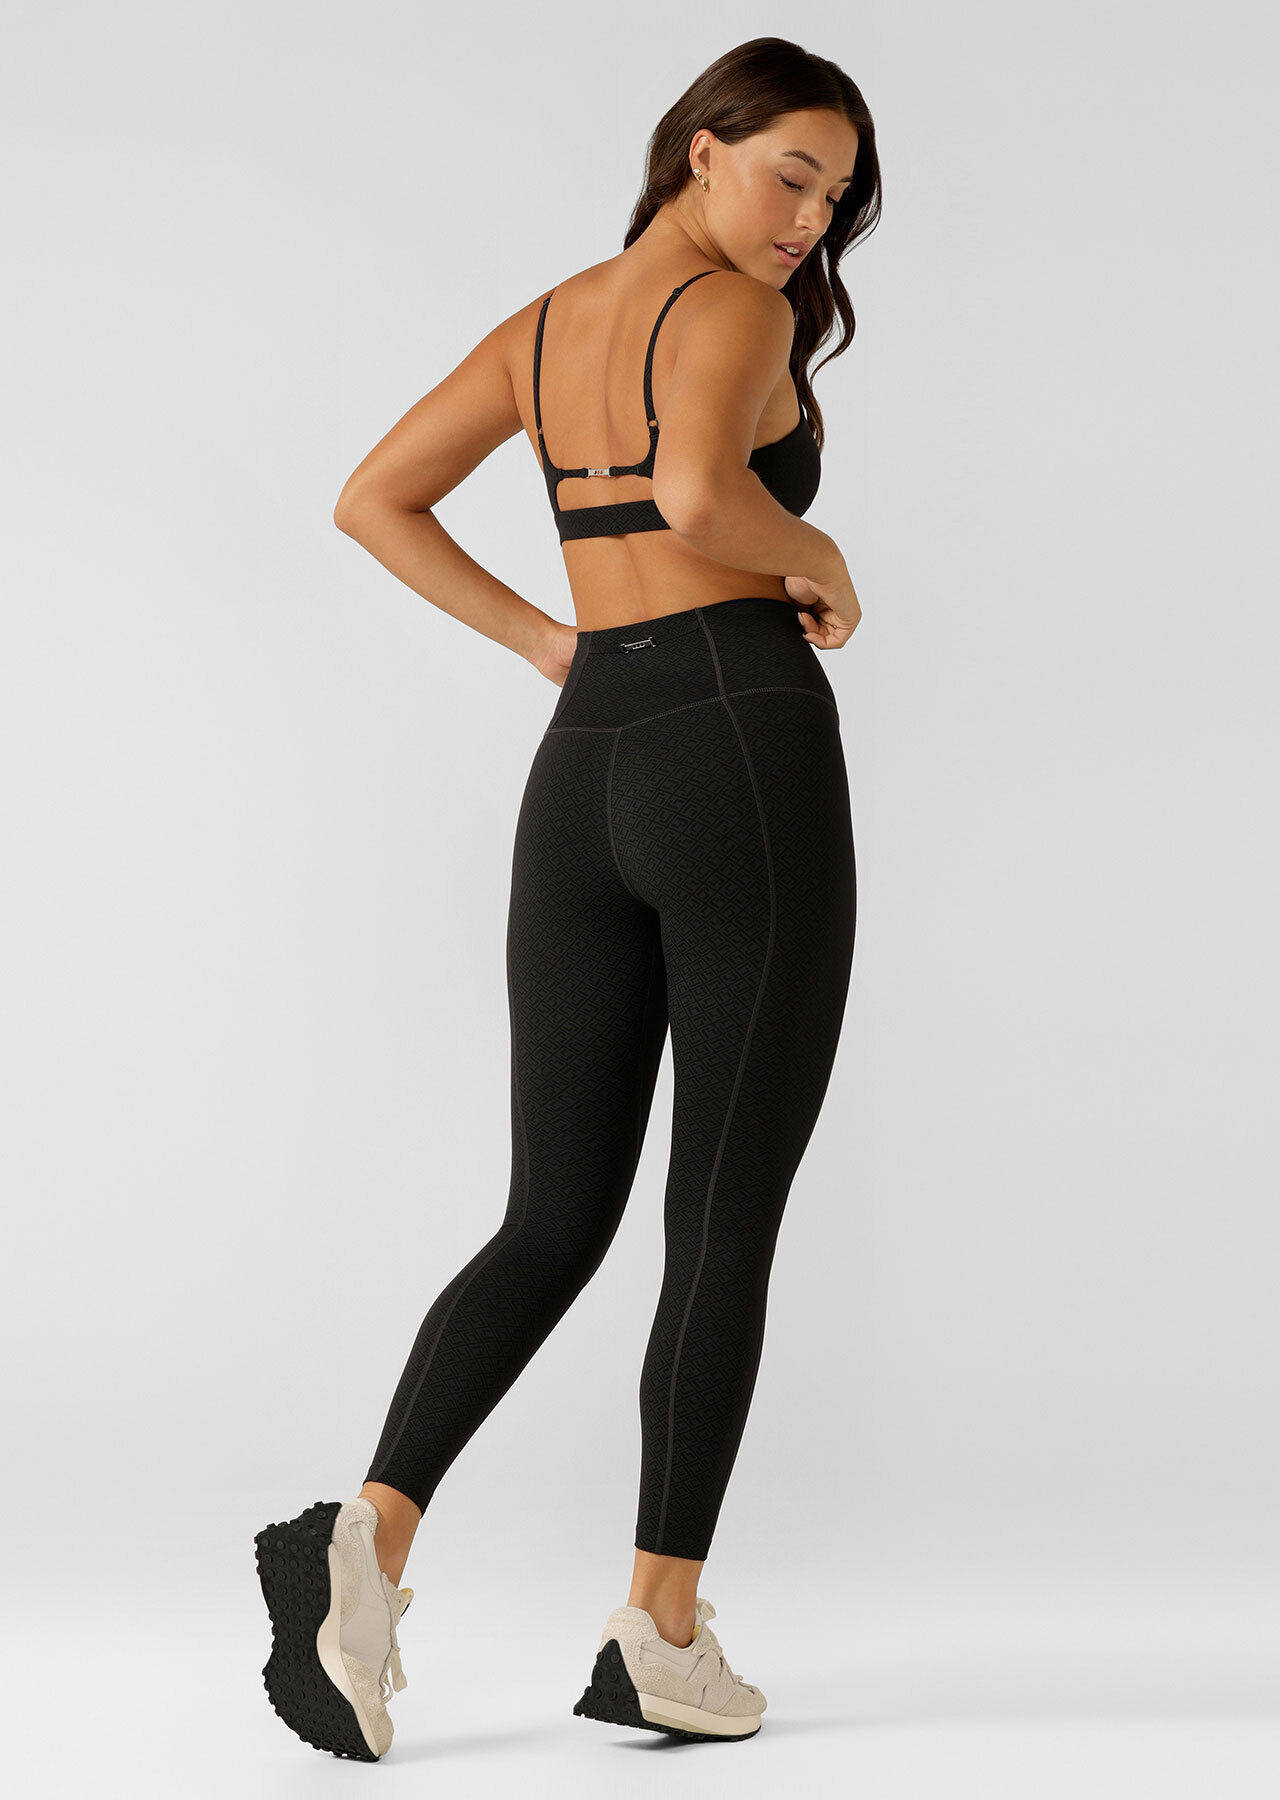 No T Line Yoga Pants Gym Leggings Women Girl Fitness Soft Tights High Waist  Elastic Breathable Sports Pants Nylon - AliExpress